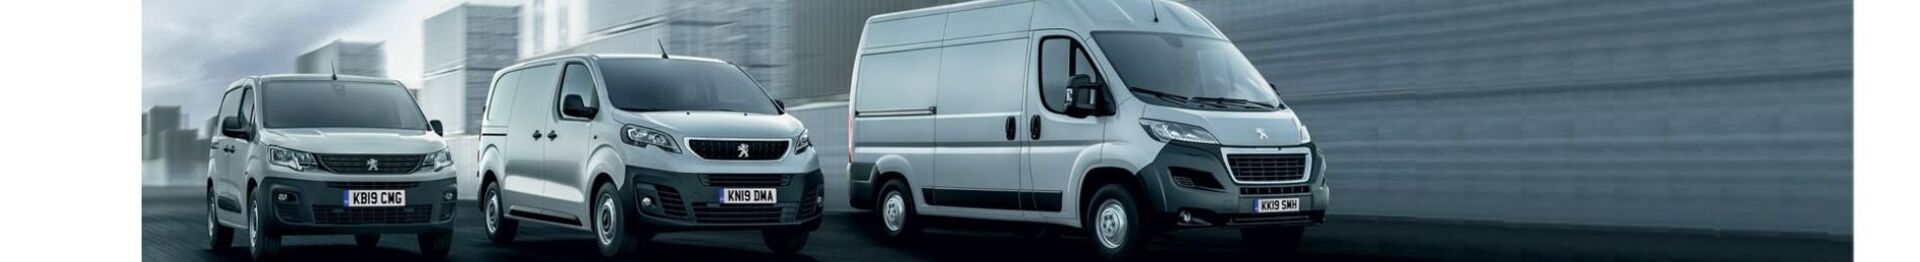 Peugeot Van & Business Hero Image